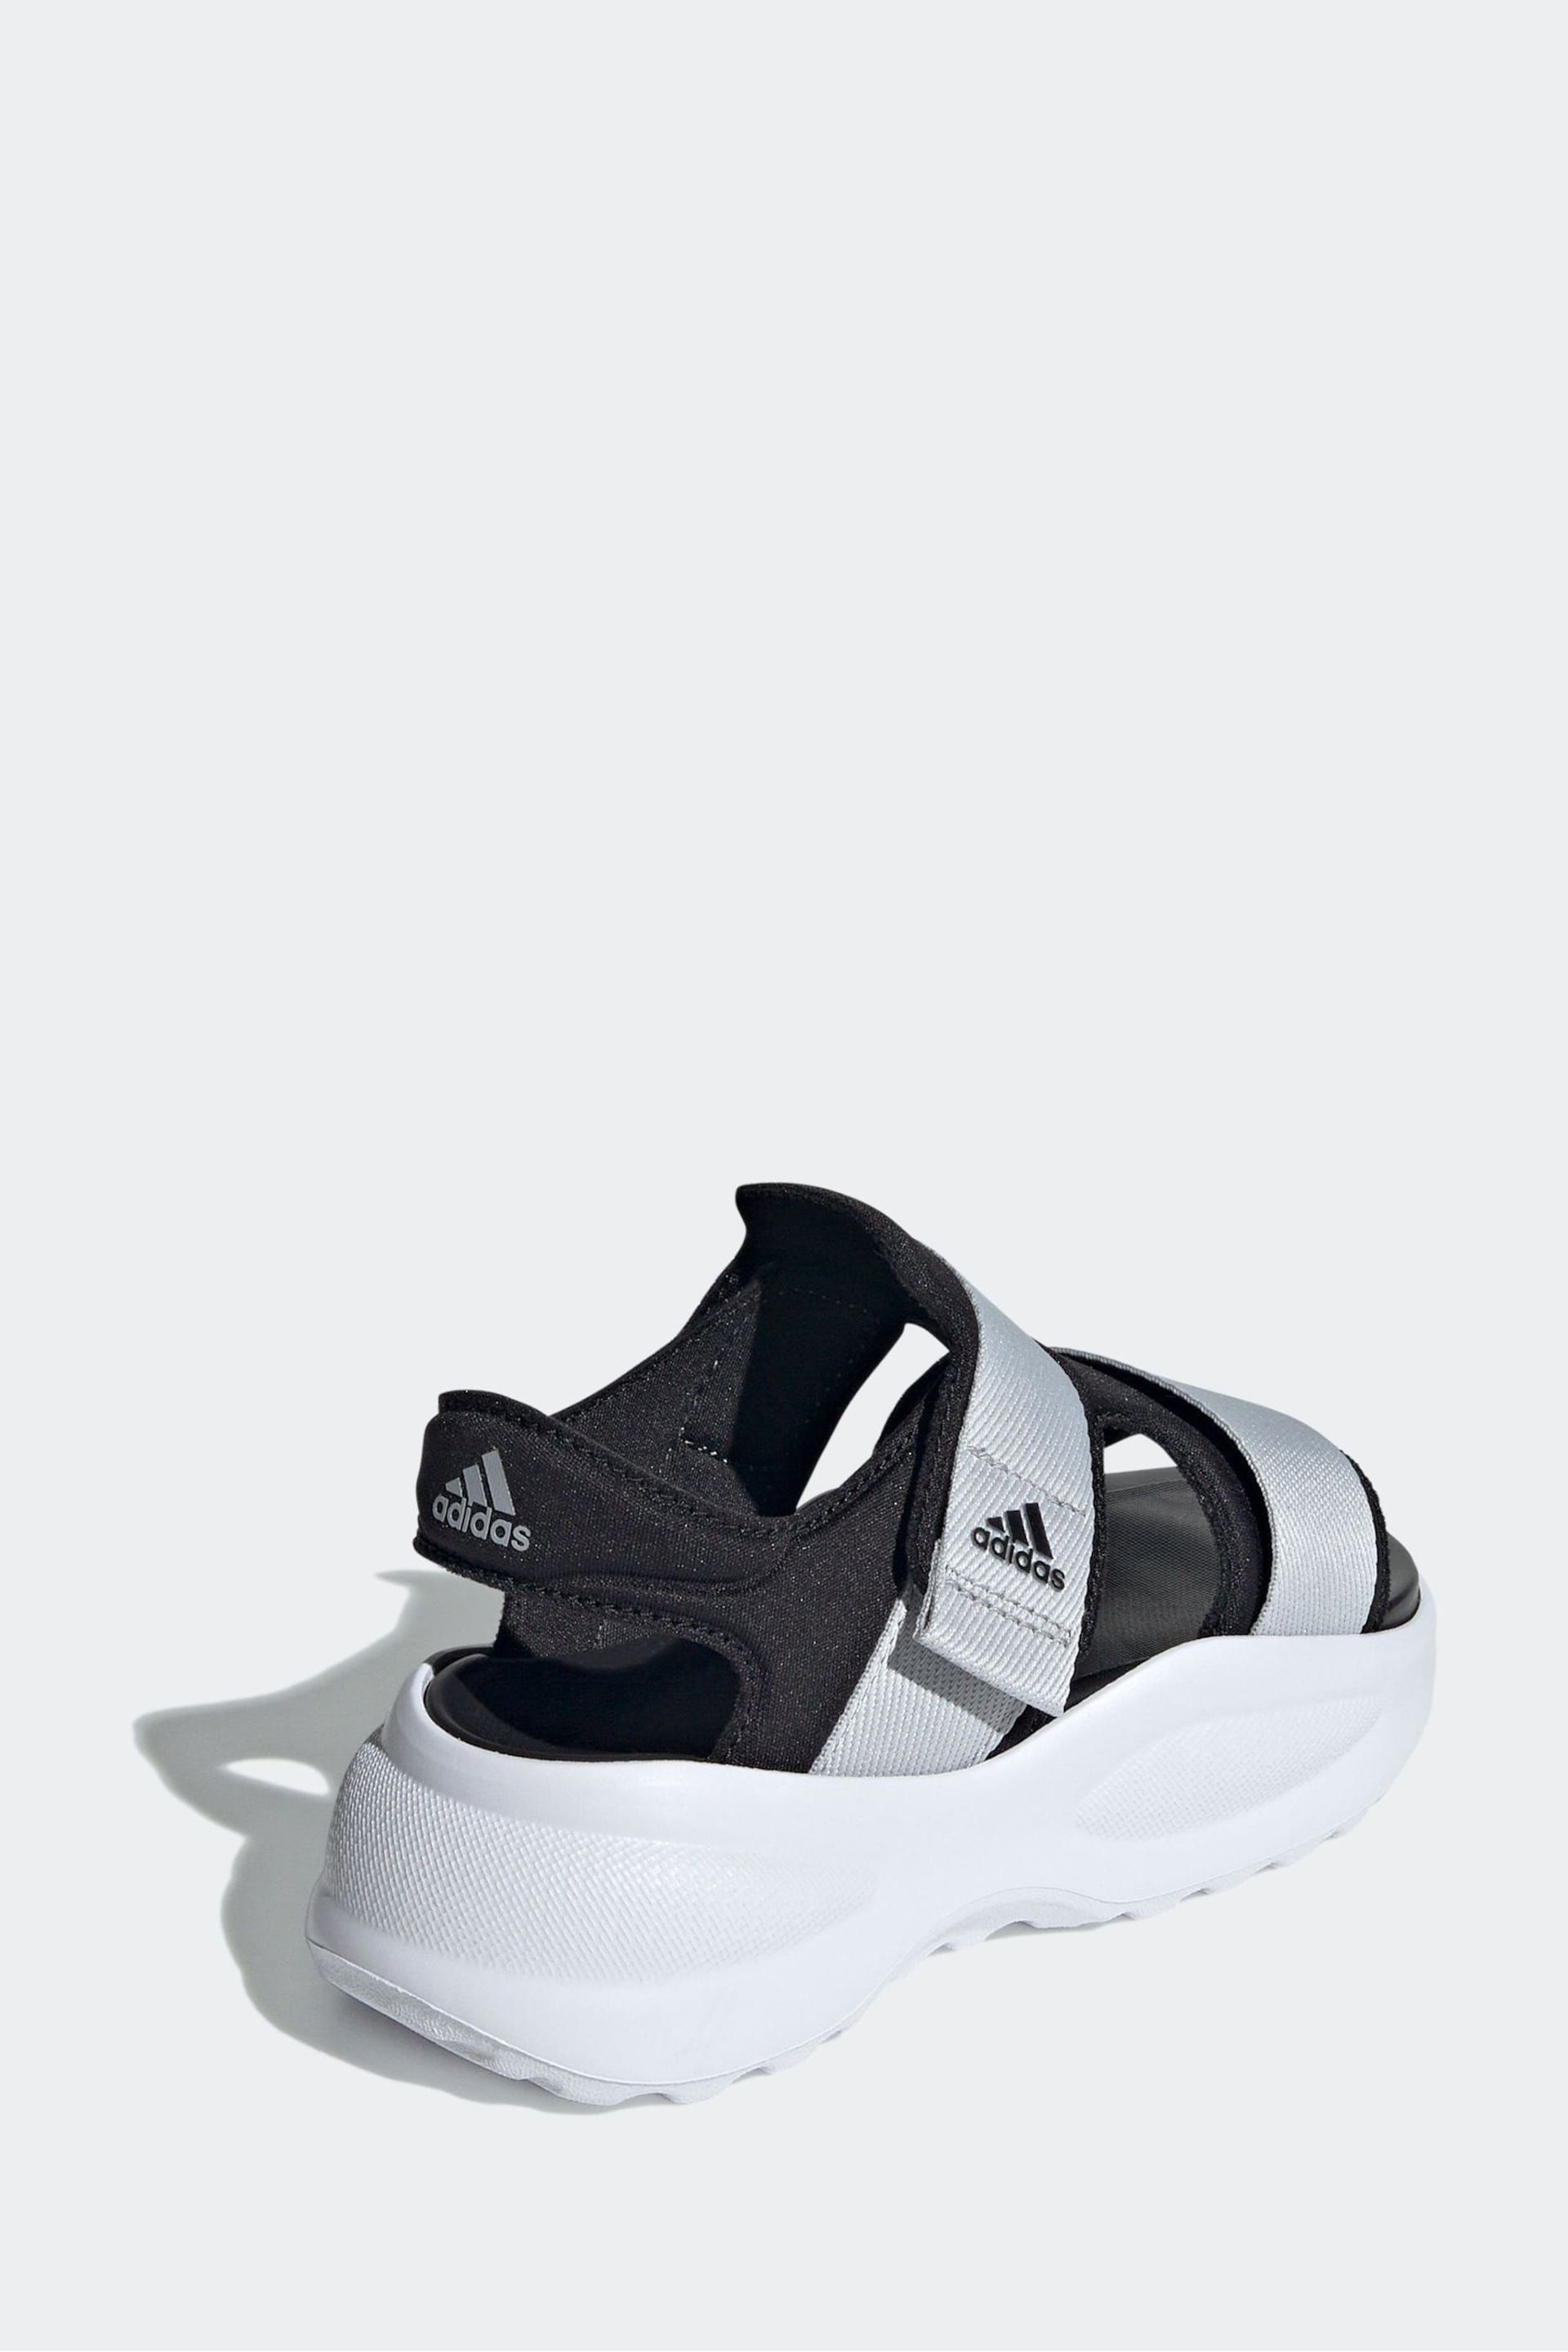 adidas Black Kids Mehana Sandals - Image 4 of 8